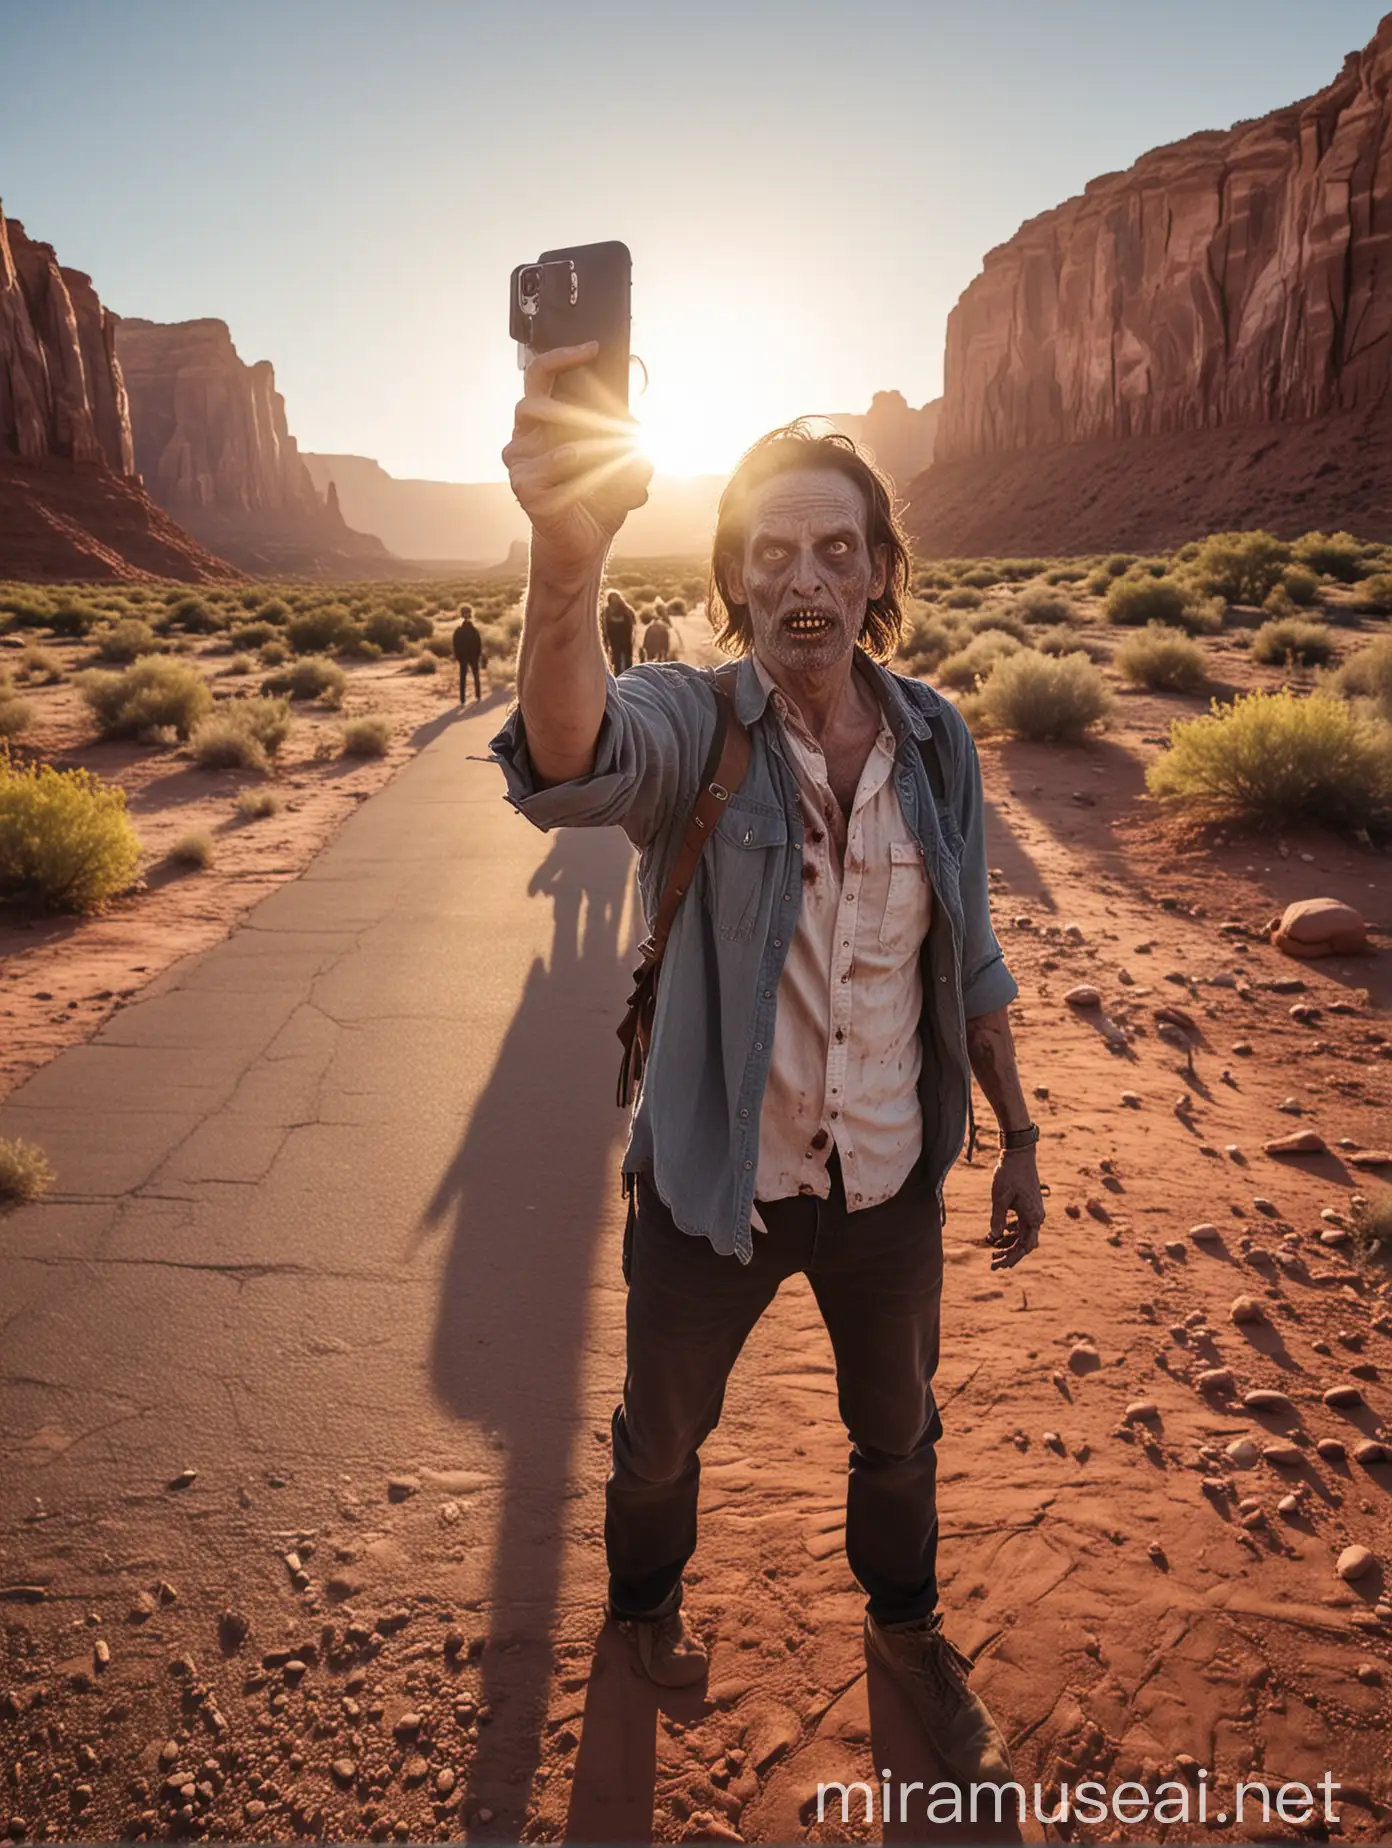 walking dead style zombie tourist in moab utah, taking a selfie in the evening light